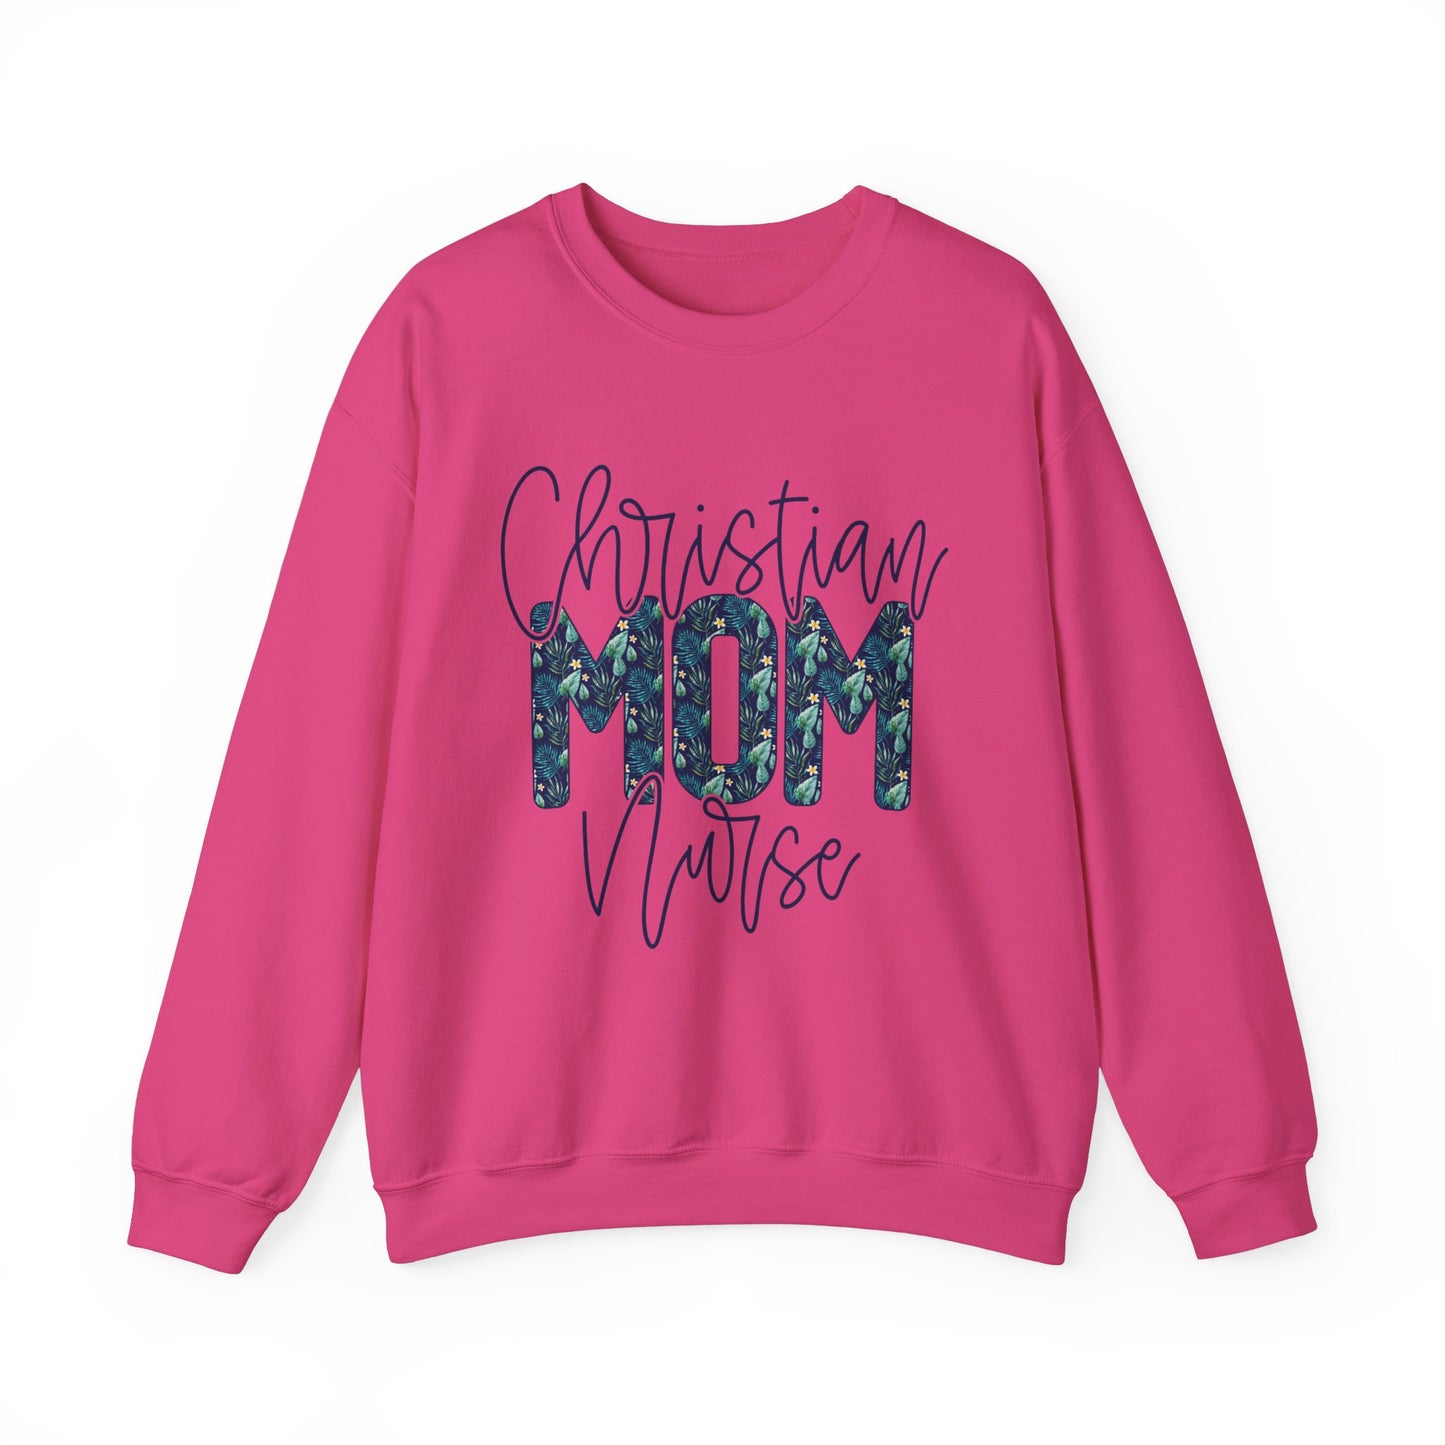 Christian Mom Nurse Women's Sweatshirt